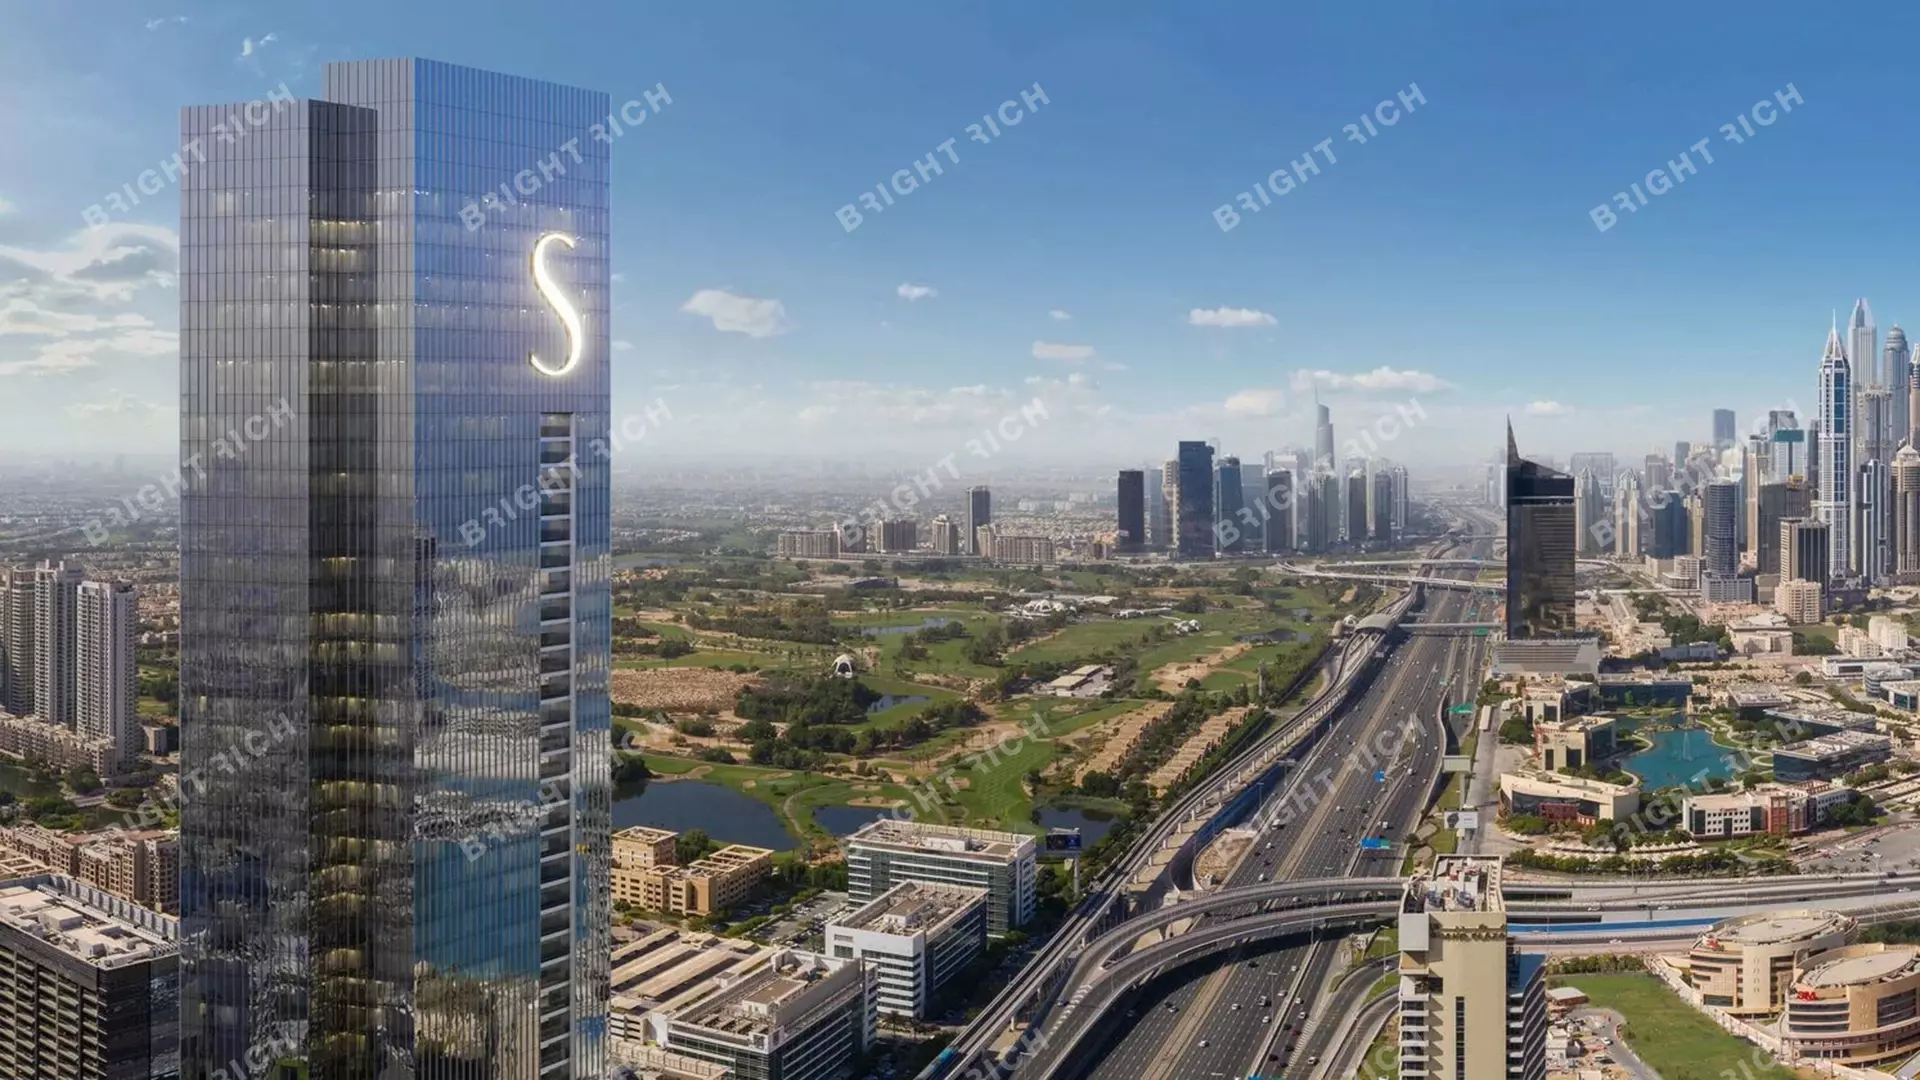 The S, апарт-комплекс в Дубае - 1